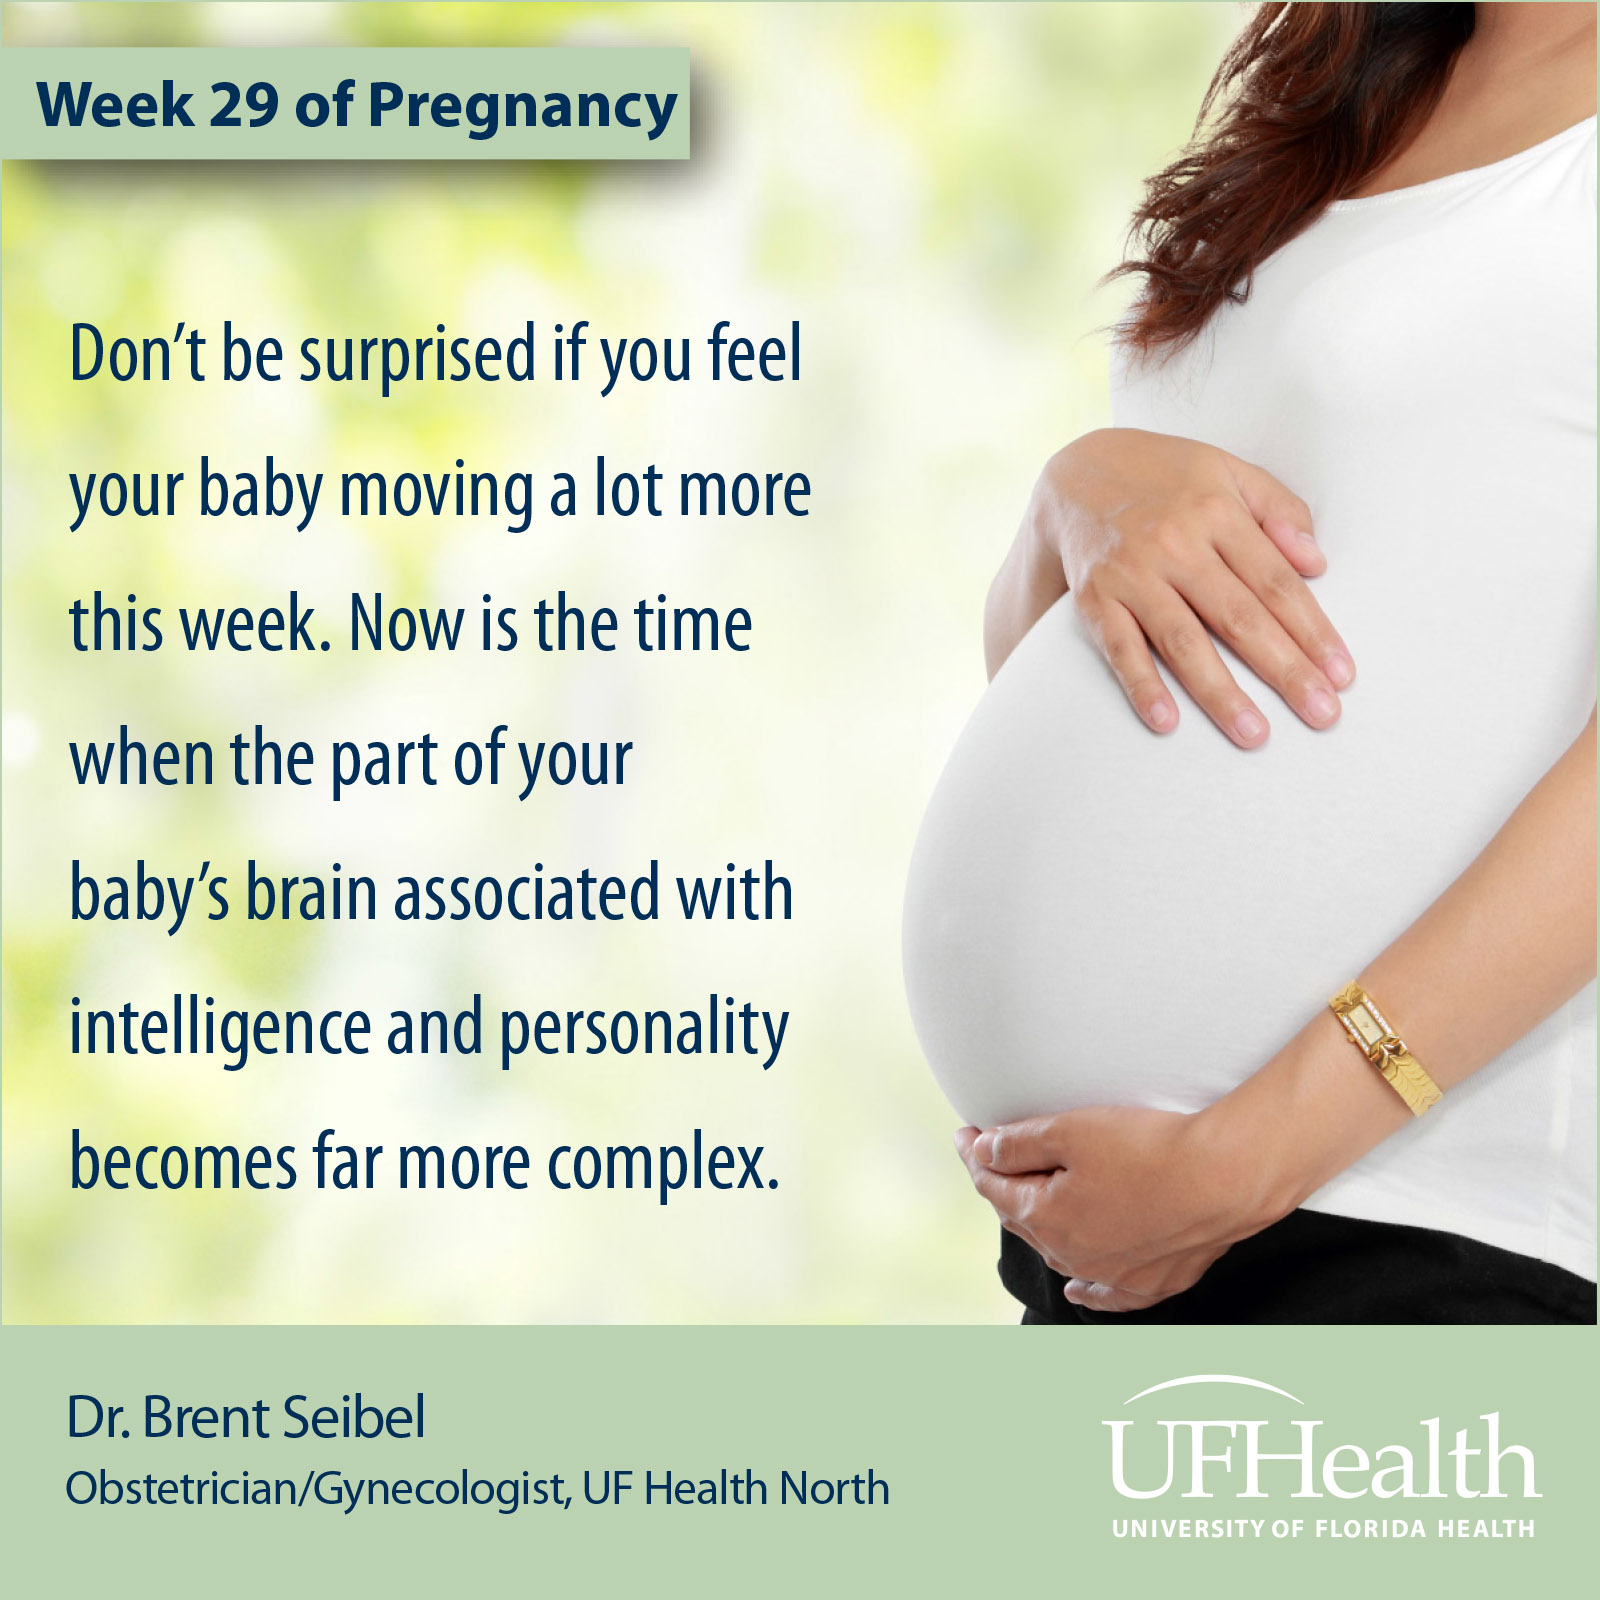 UF Health North pregnancy tip 29